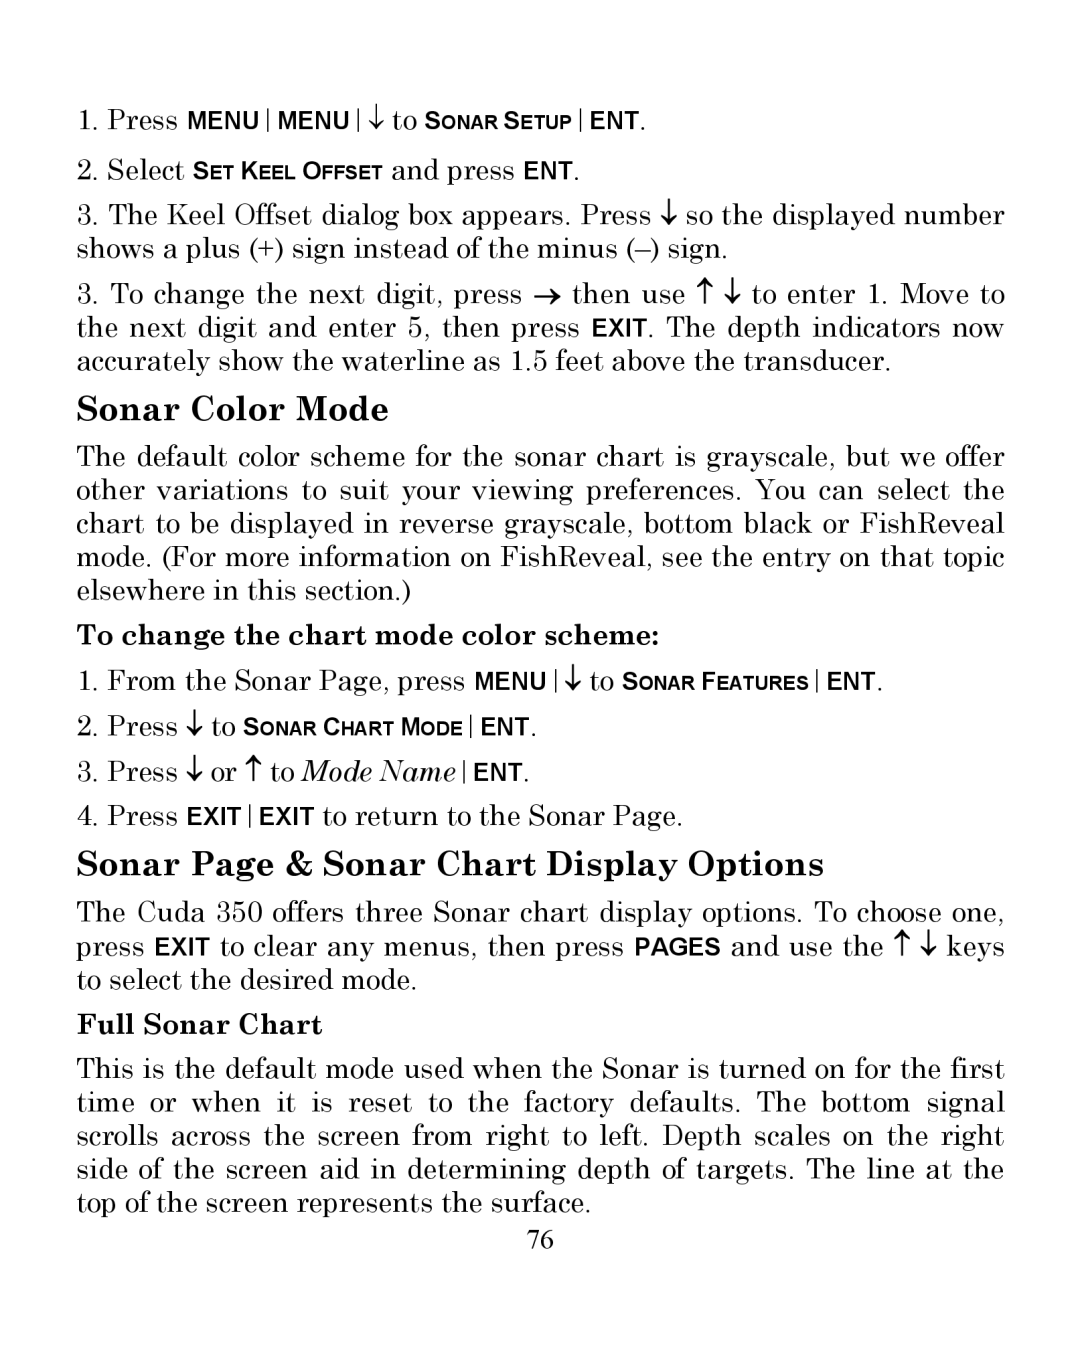 Eagle Electronics 350 S/MAP manual Sonar Color Mode, Sonar Page & Sonar Chart Display Options, Full Sonar Chart 